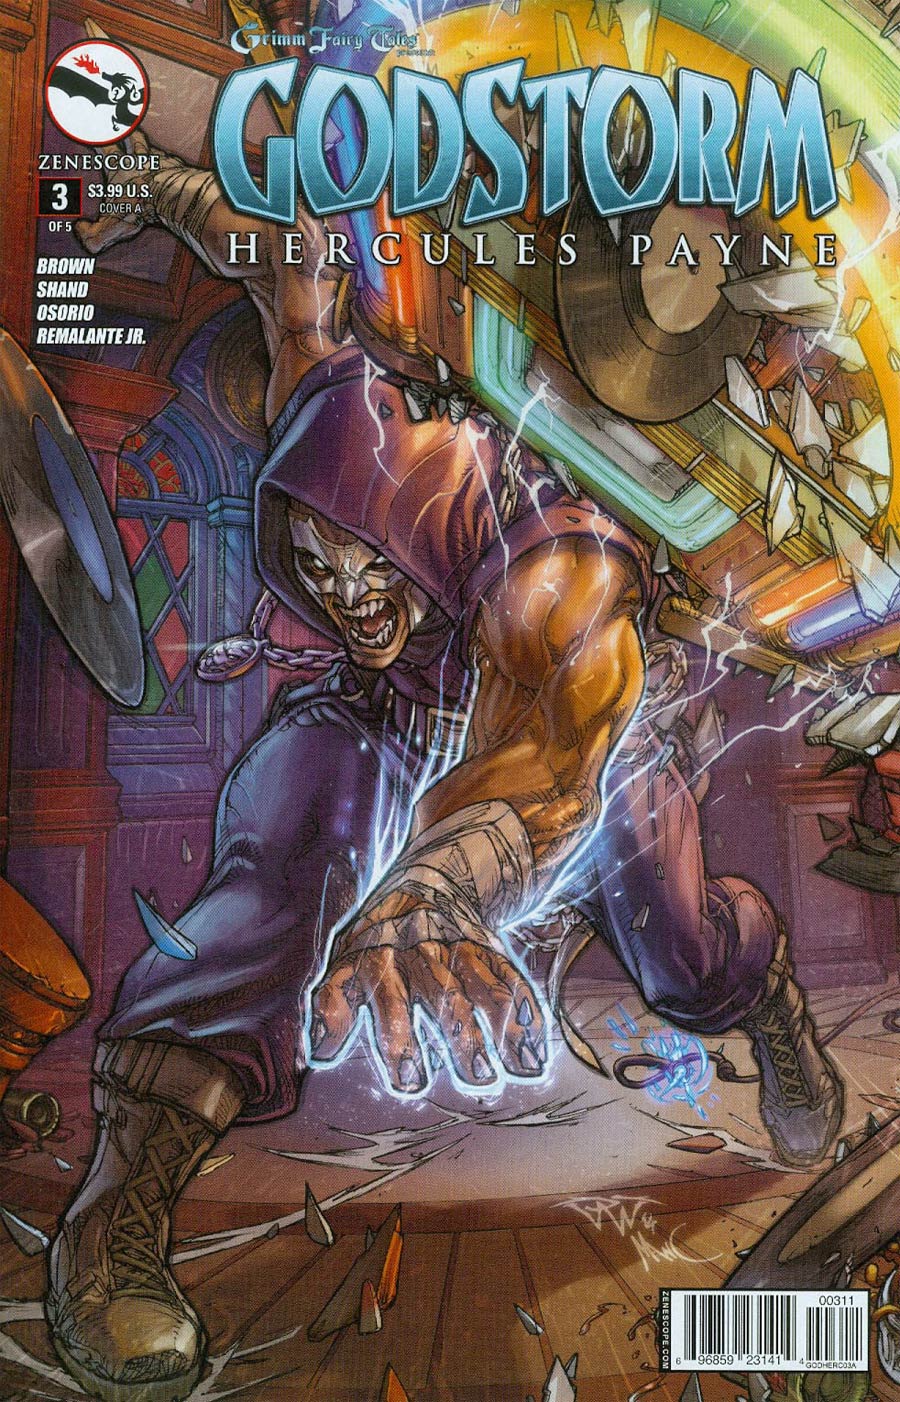 Grimm Fairy Tales Presents Godstorm Hercules Payne #3 Cover A Paolo Pantalena